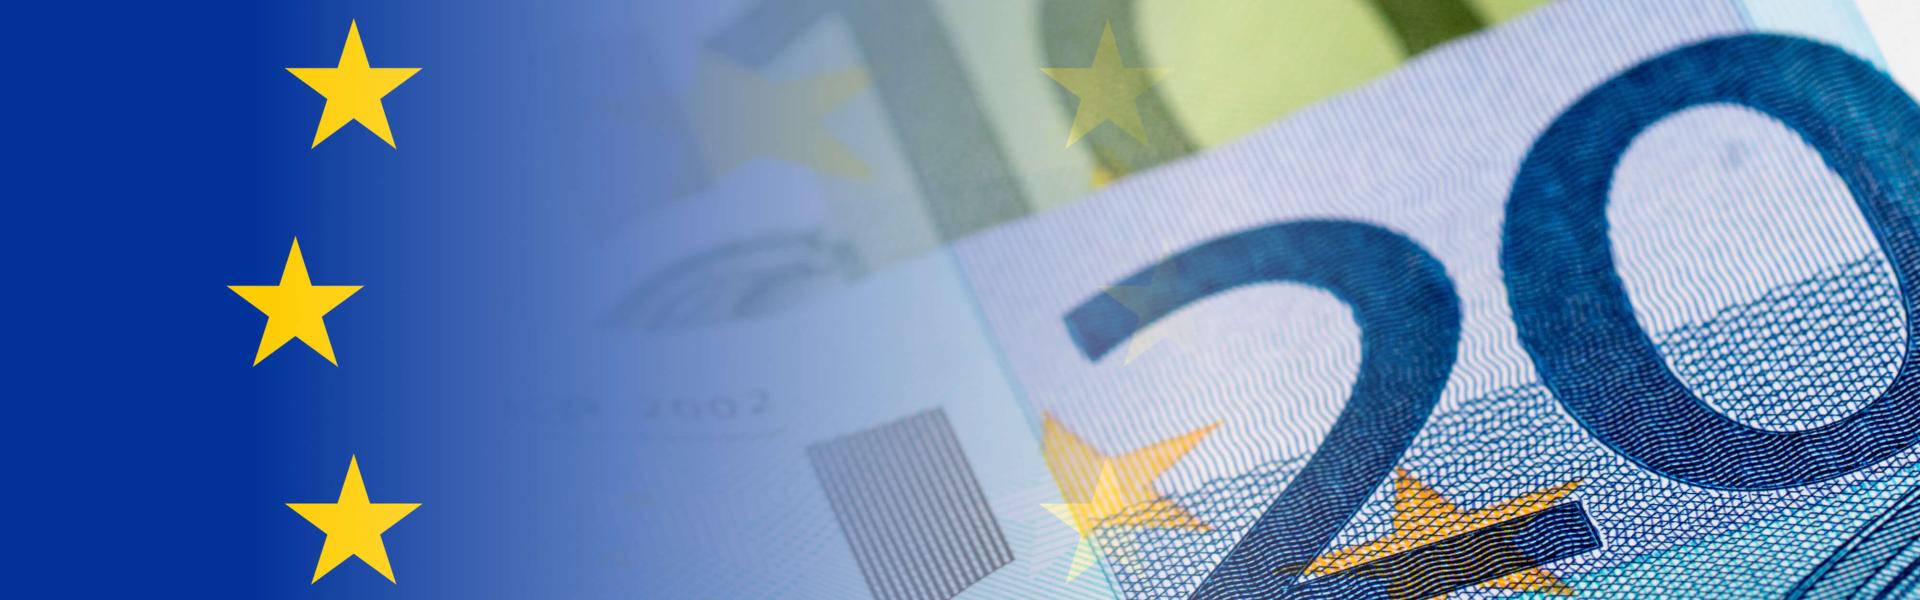 Euro banknotes and EU flag collage